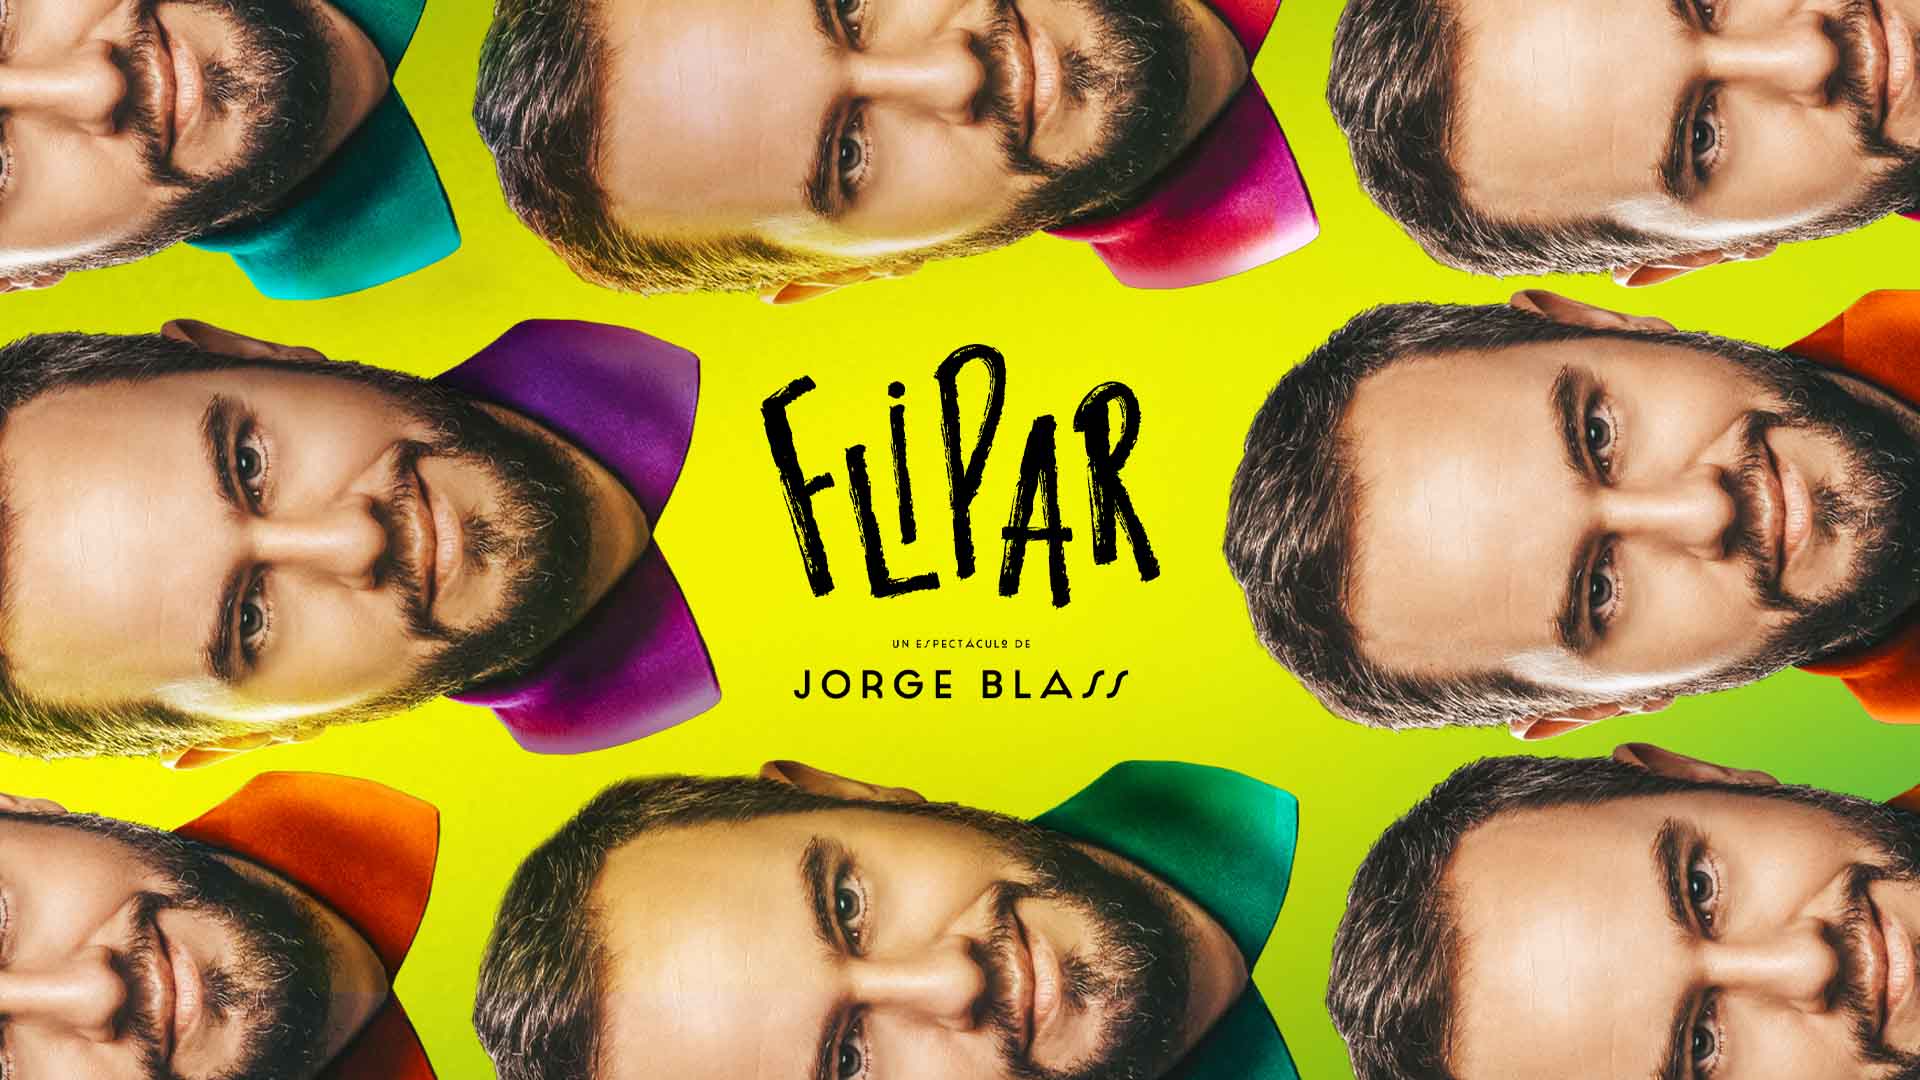 Jorge Blass - FLIPAR